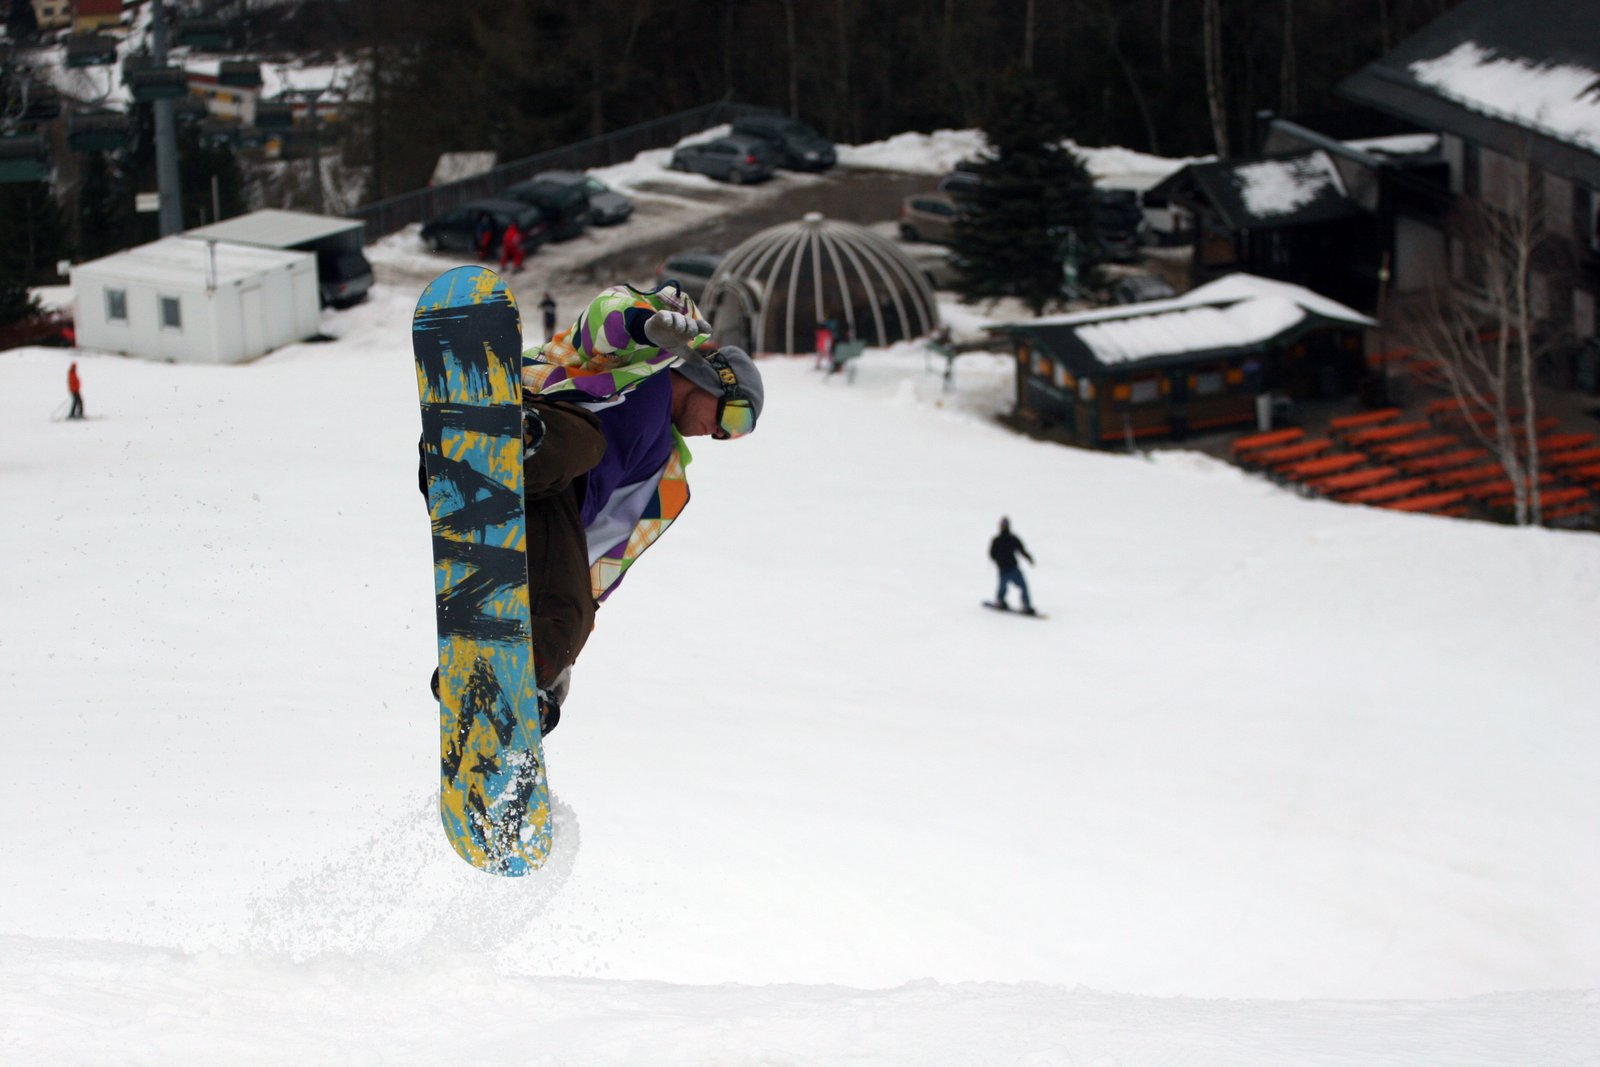 Snowboard frontflip #2